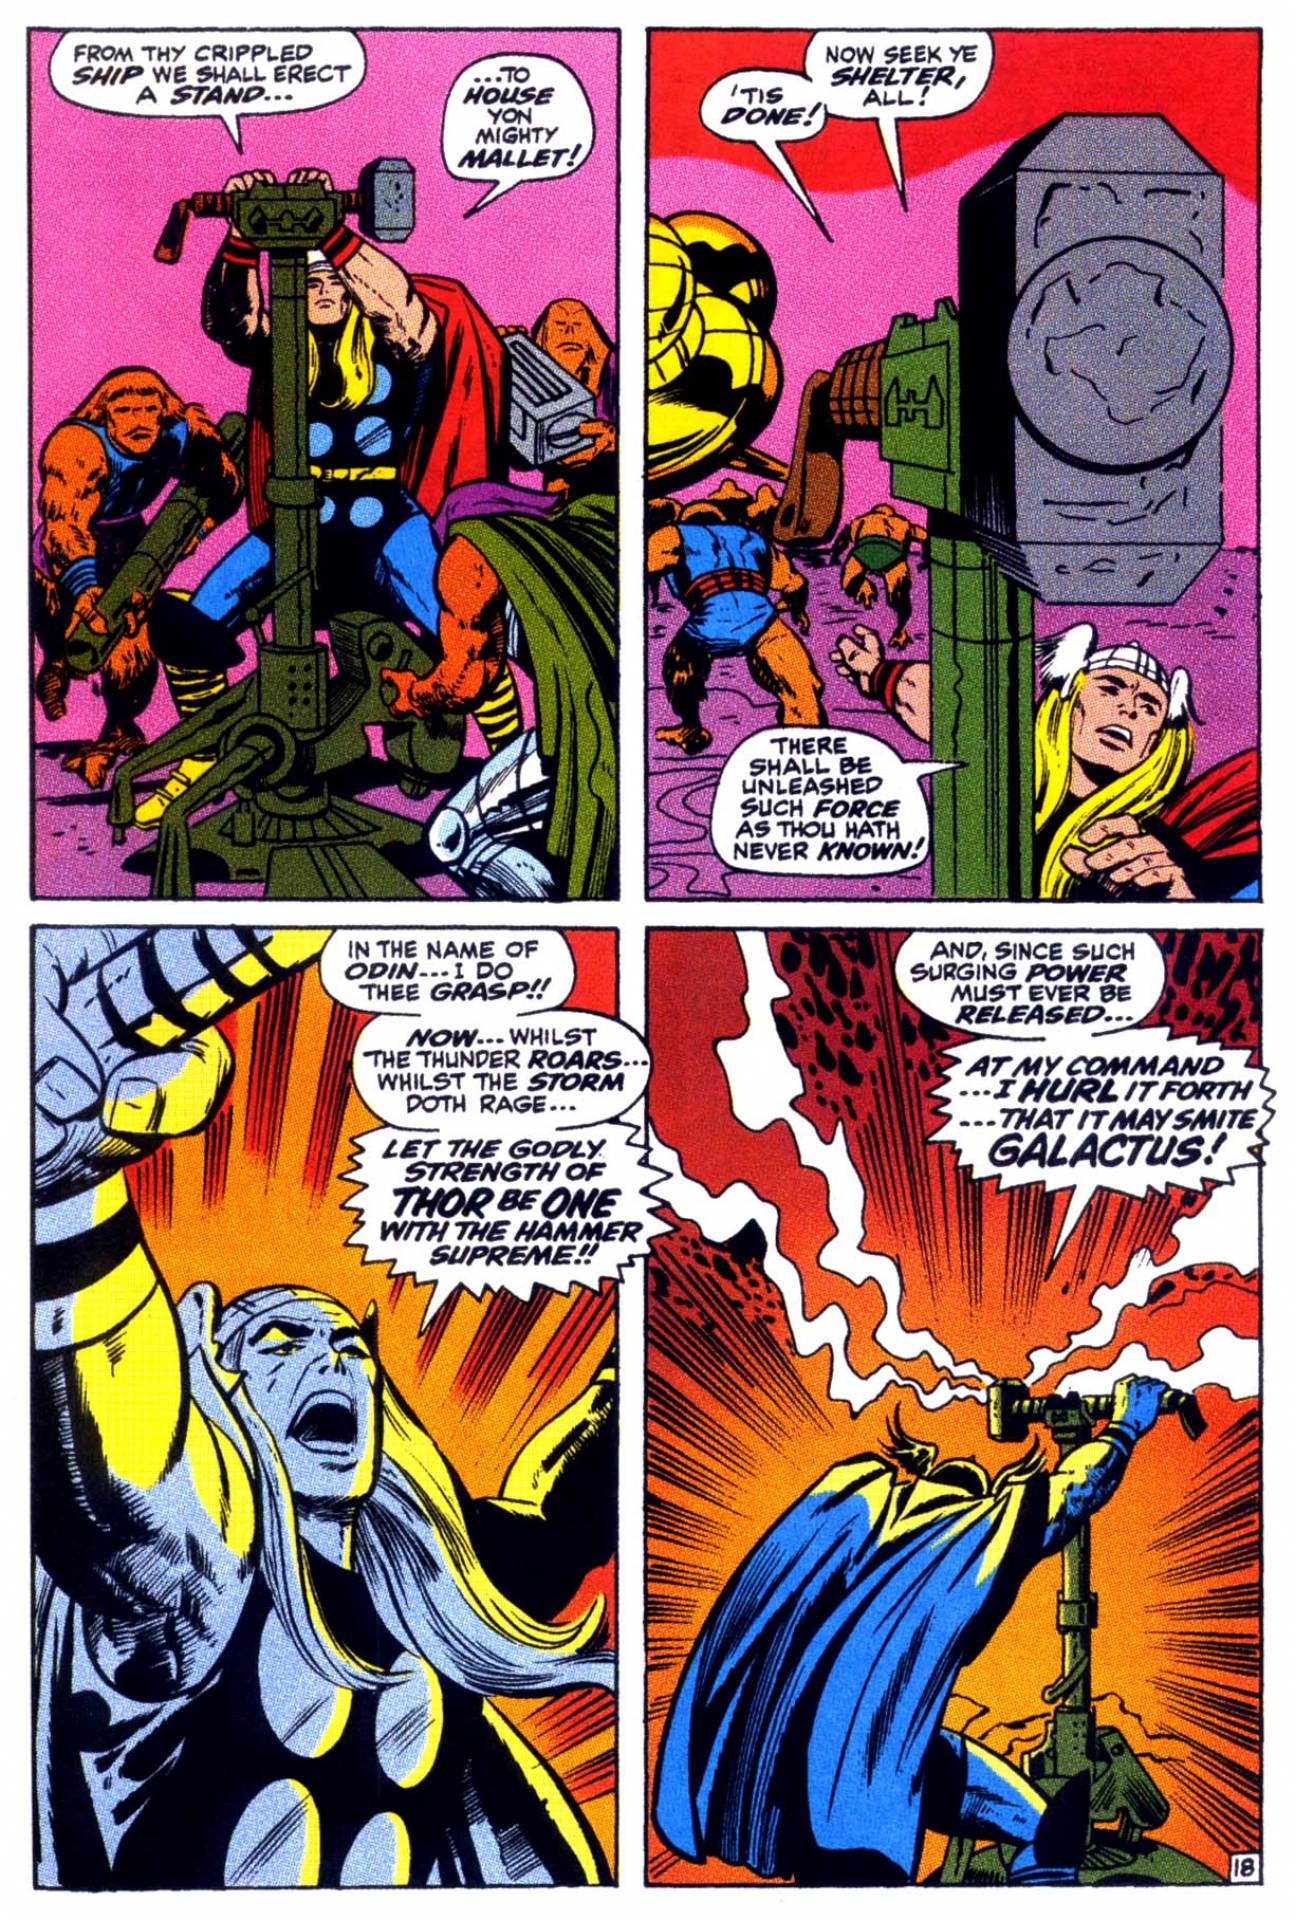 Galactus vs. Thor